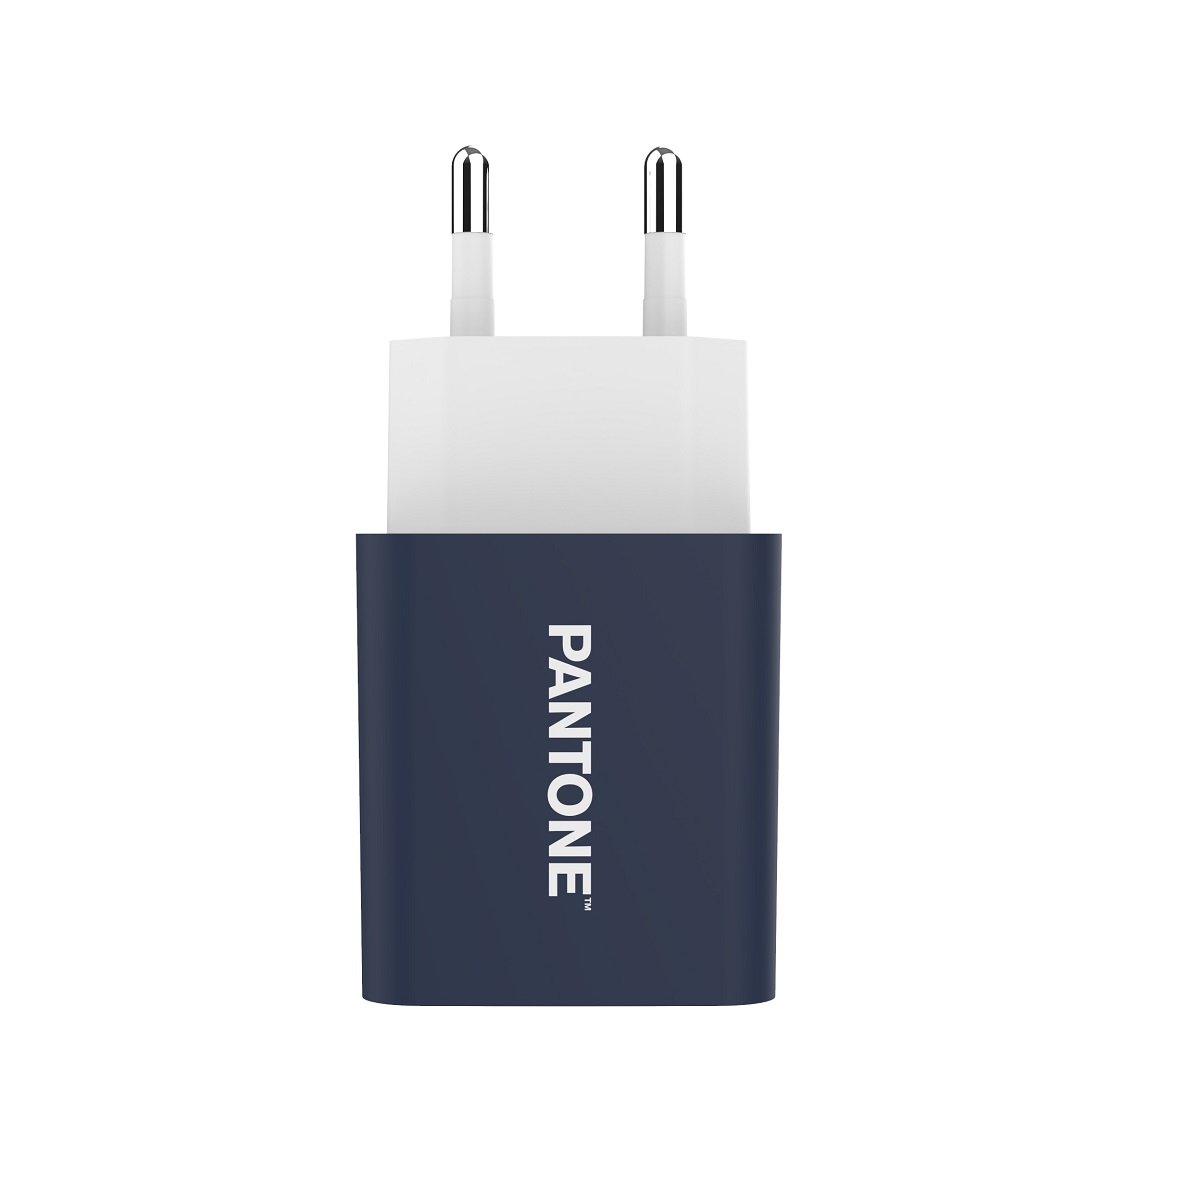 PANTONE adowarka sieciowa 2A 1x USB PT-AC1USB Navy 2380C / 2